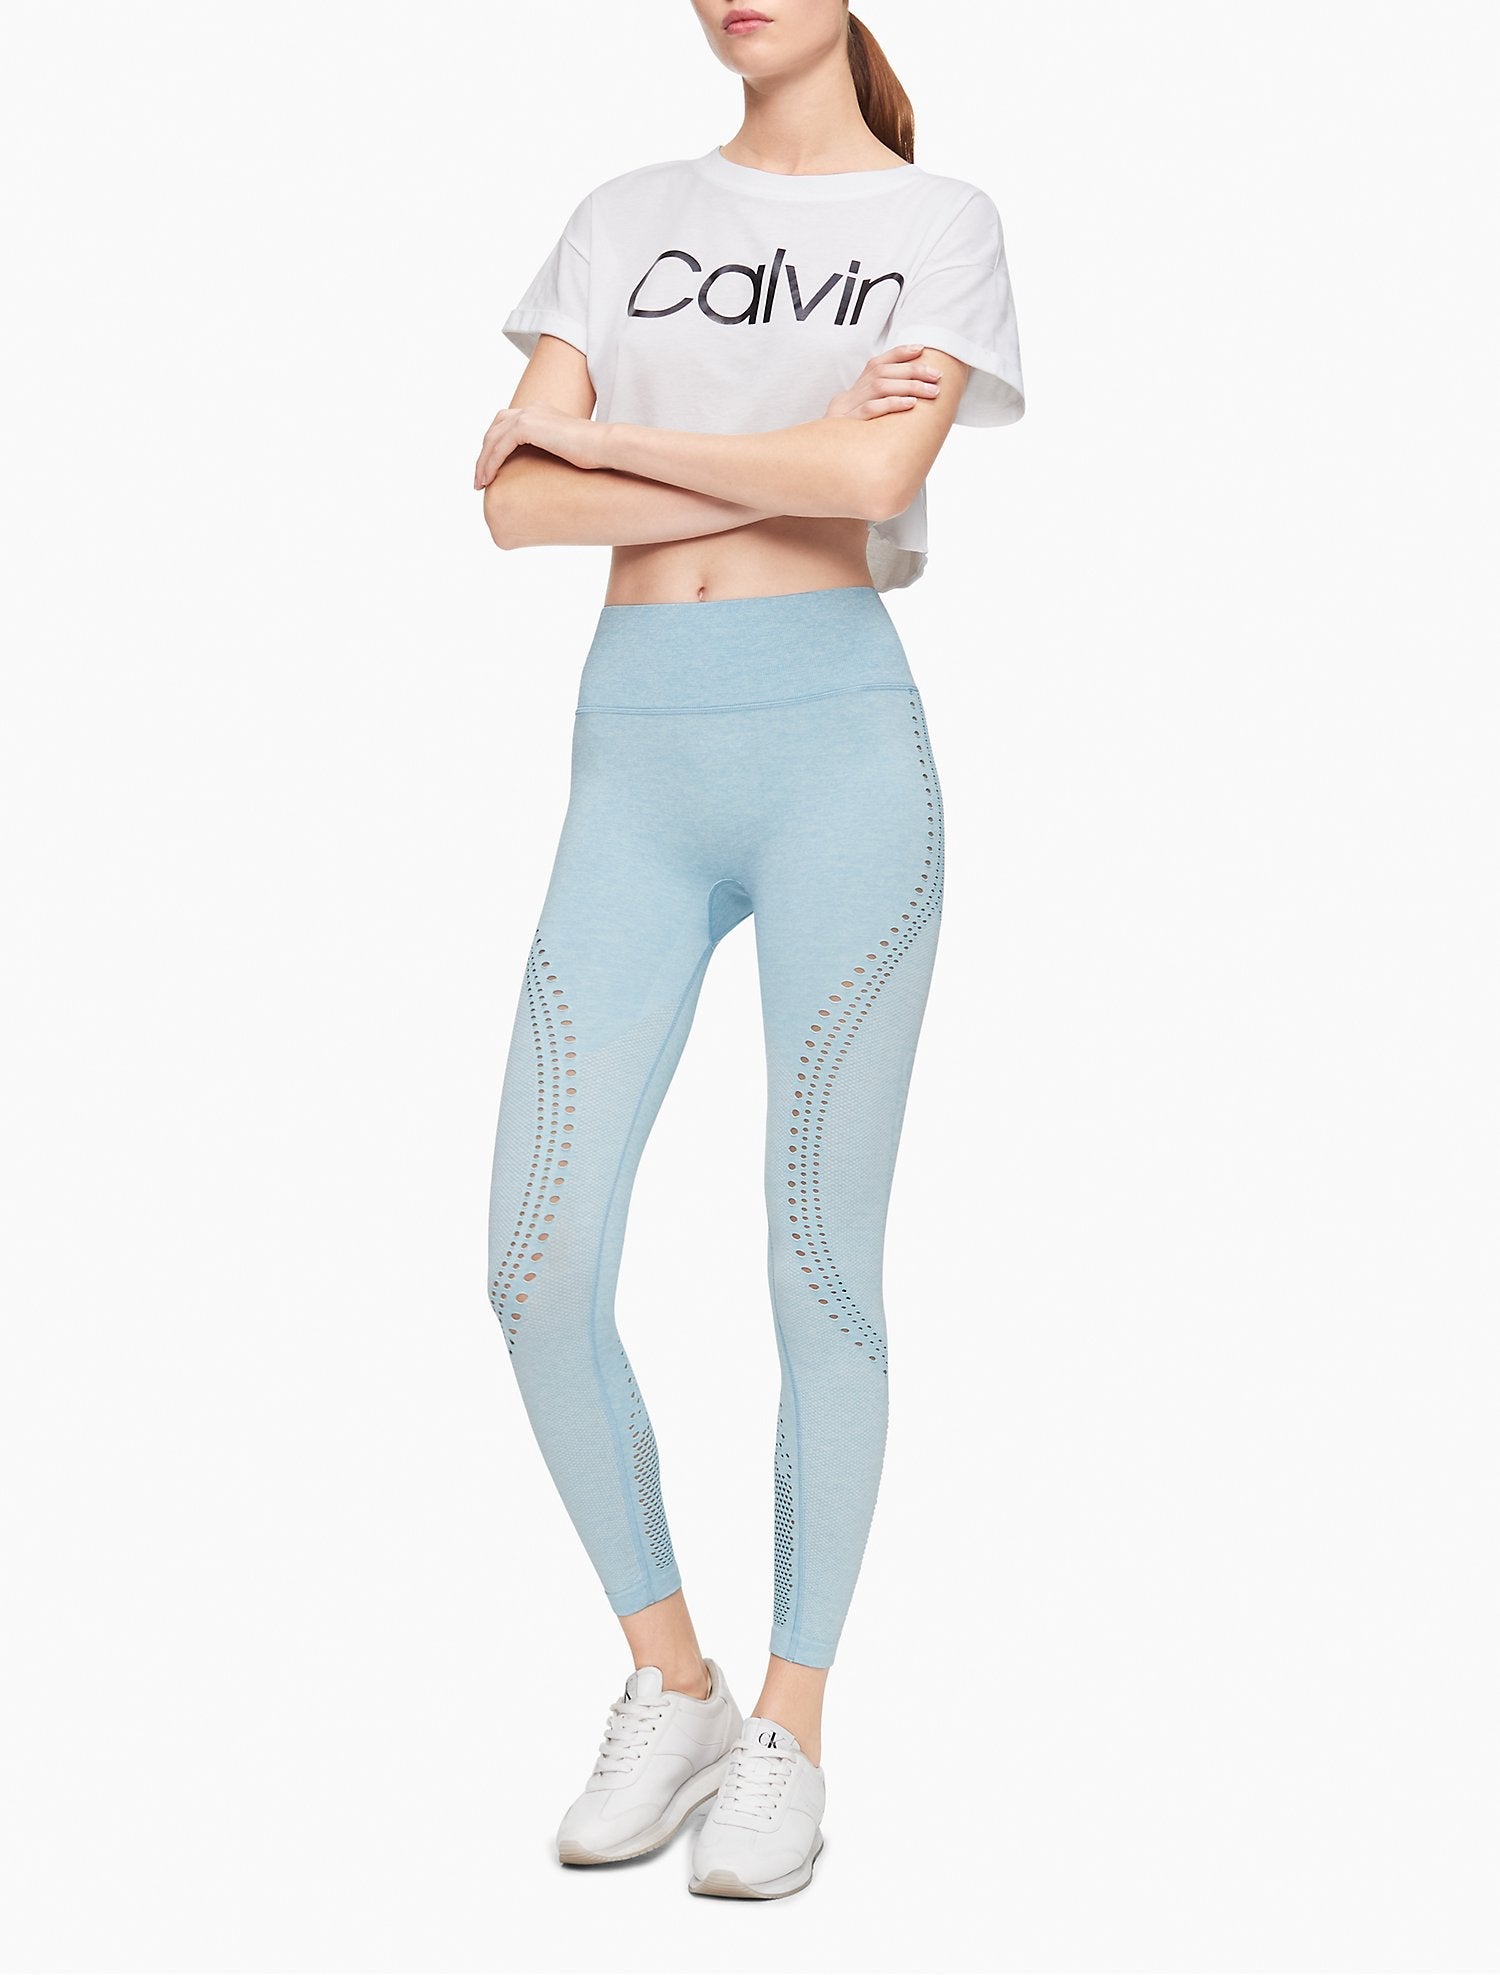 Calvin Klein Calvin Klein Blue Performance Capri Leggings Size M